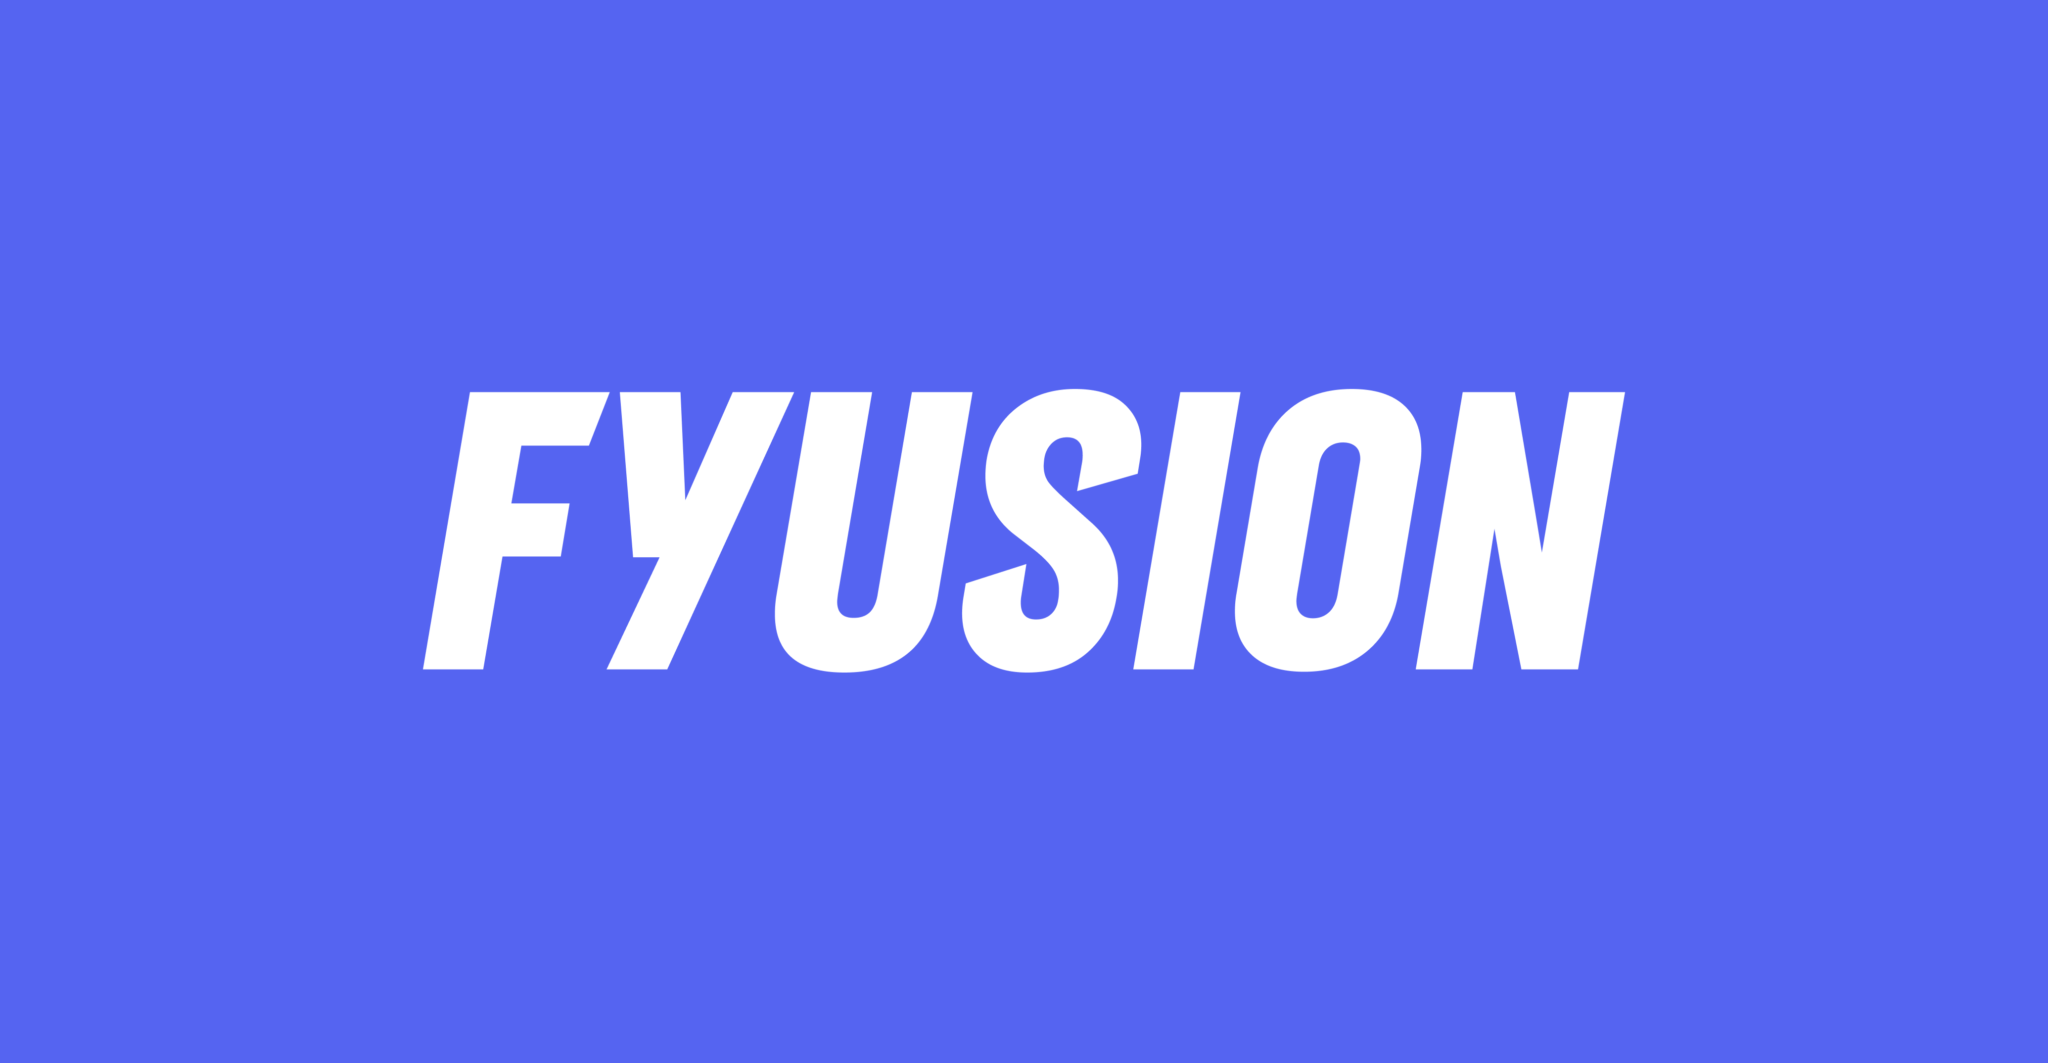 Fyusion logo on purple